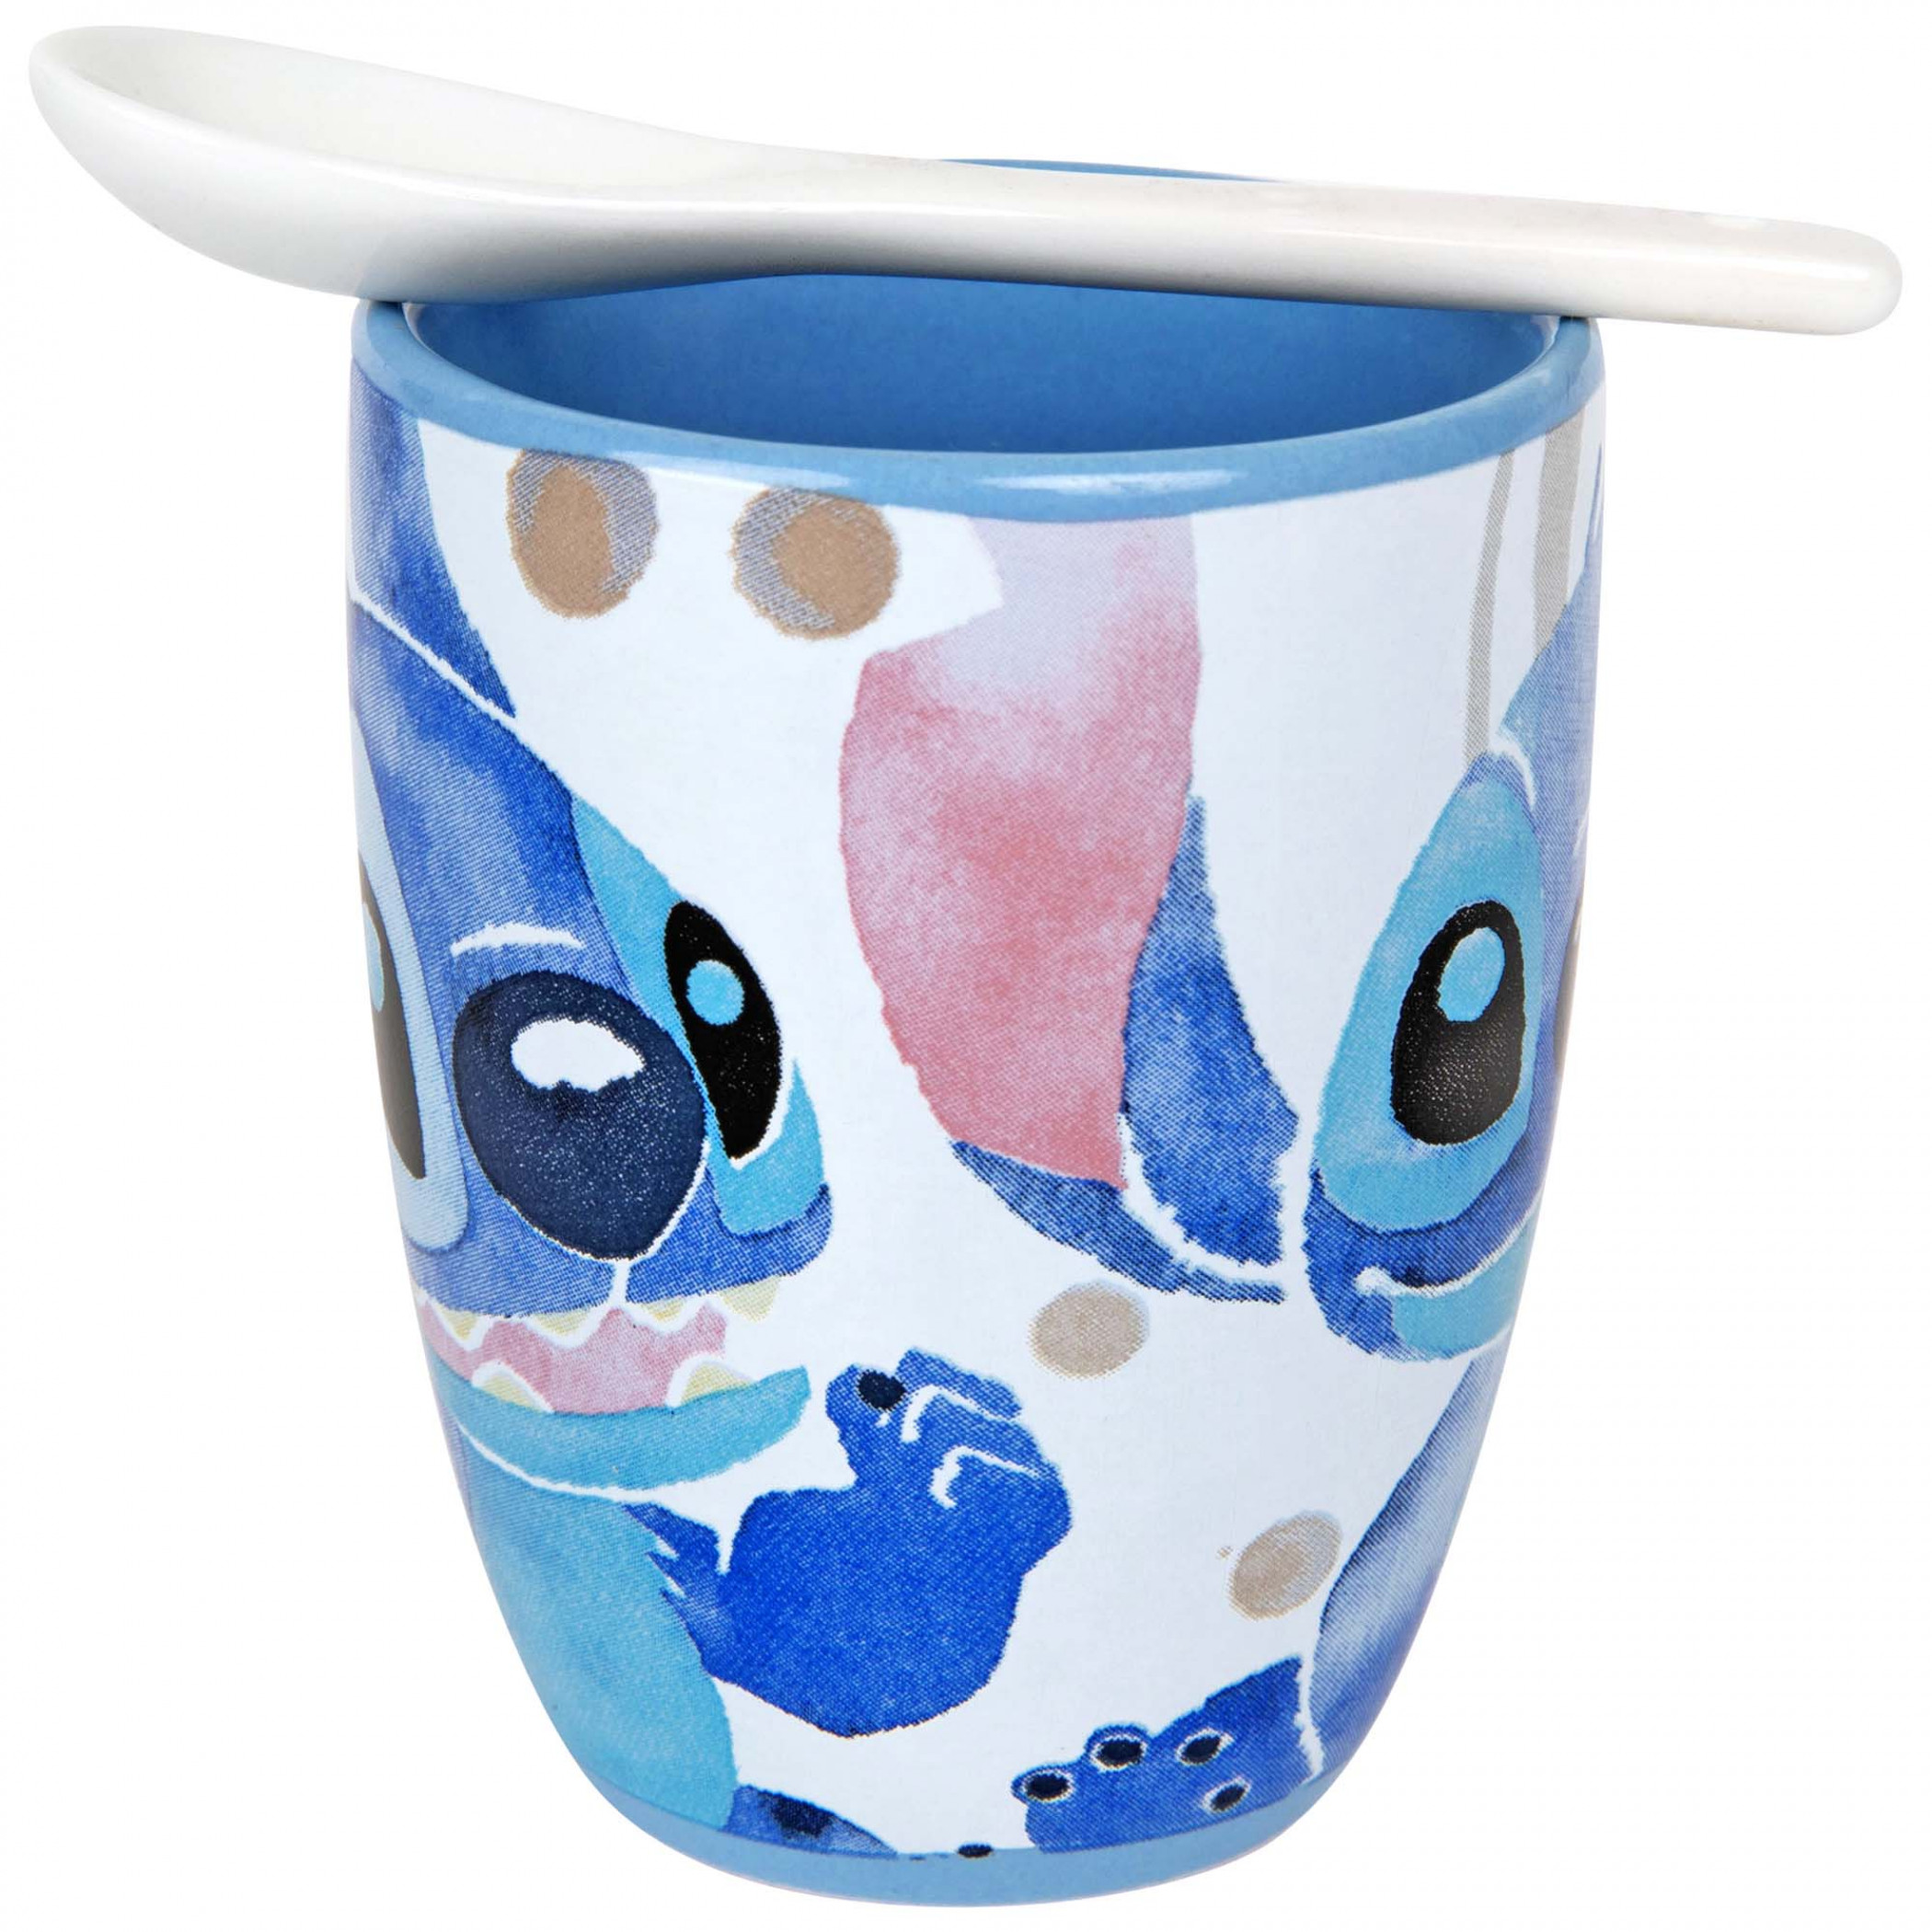 Disney Stitch Ceramic Espresso Mug with Spoon